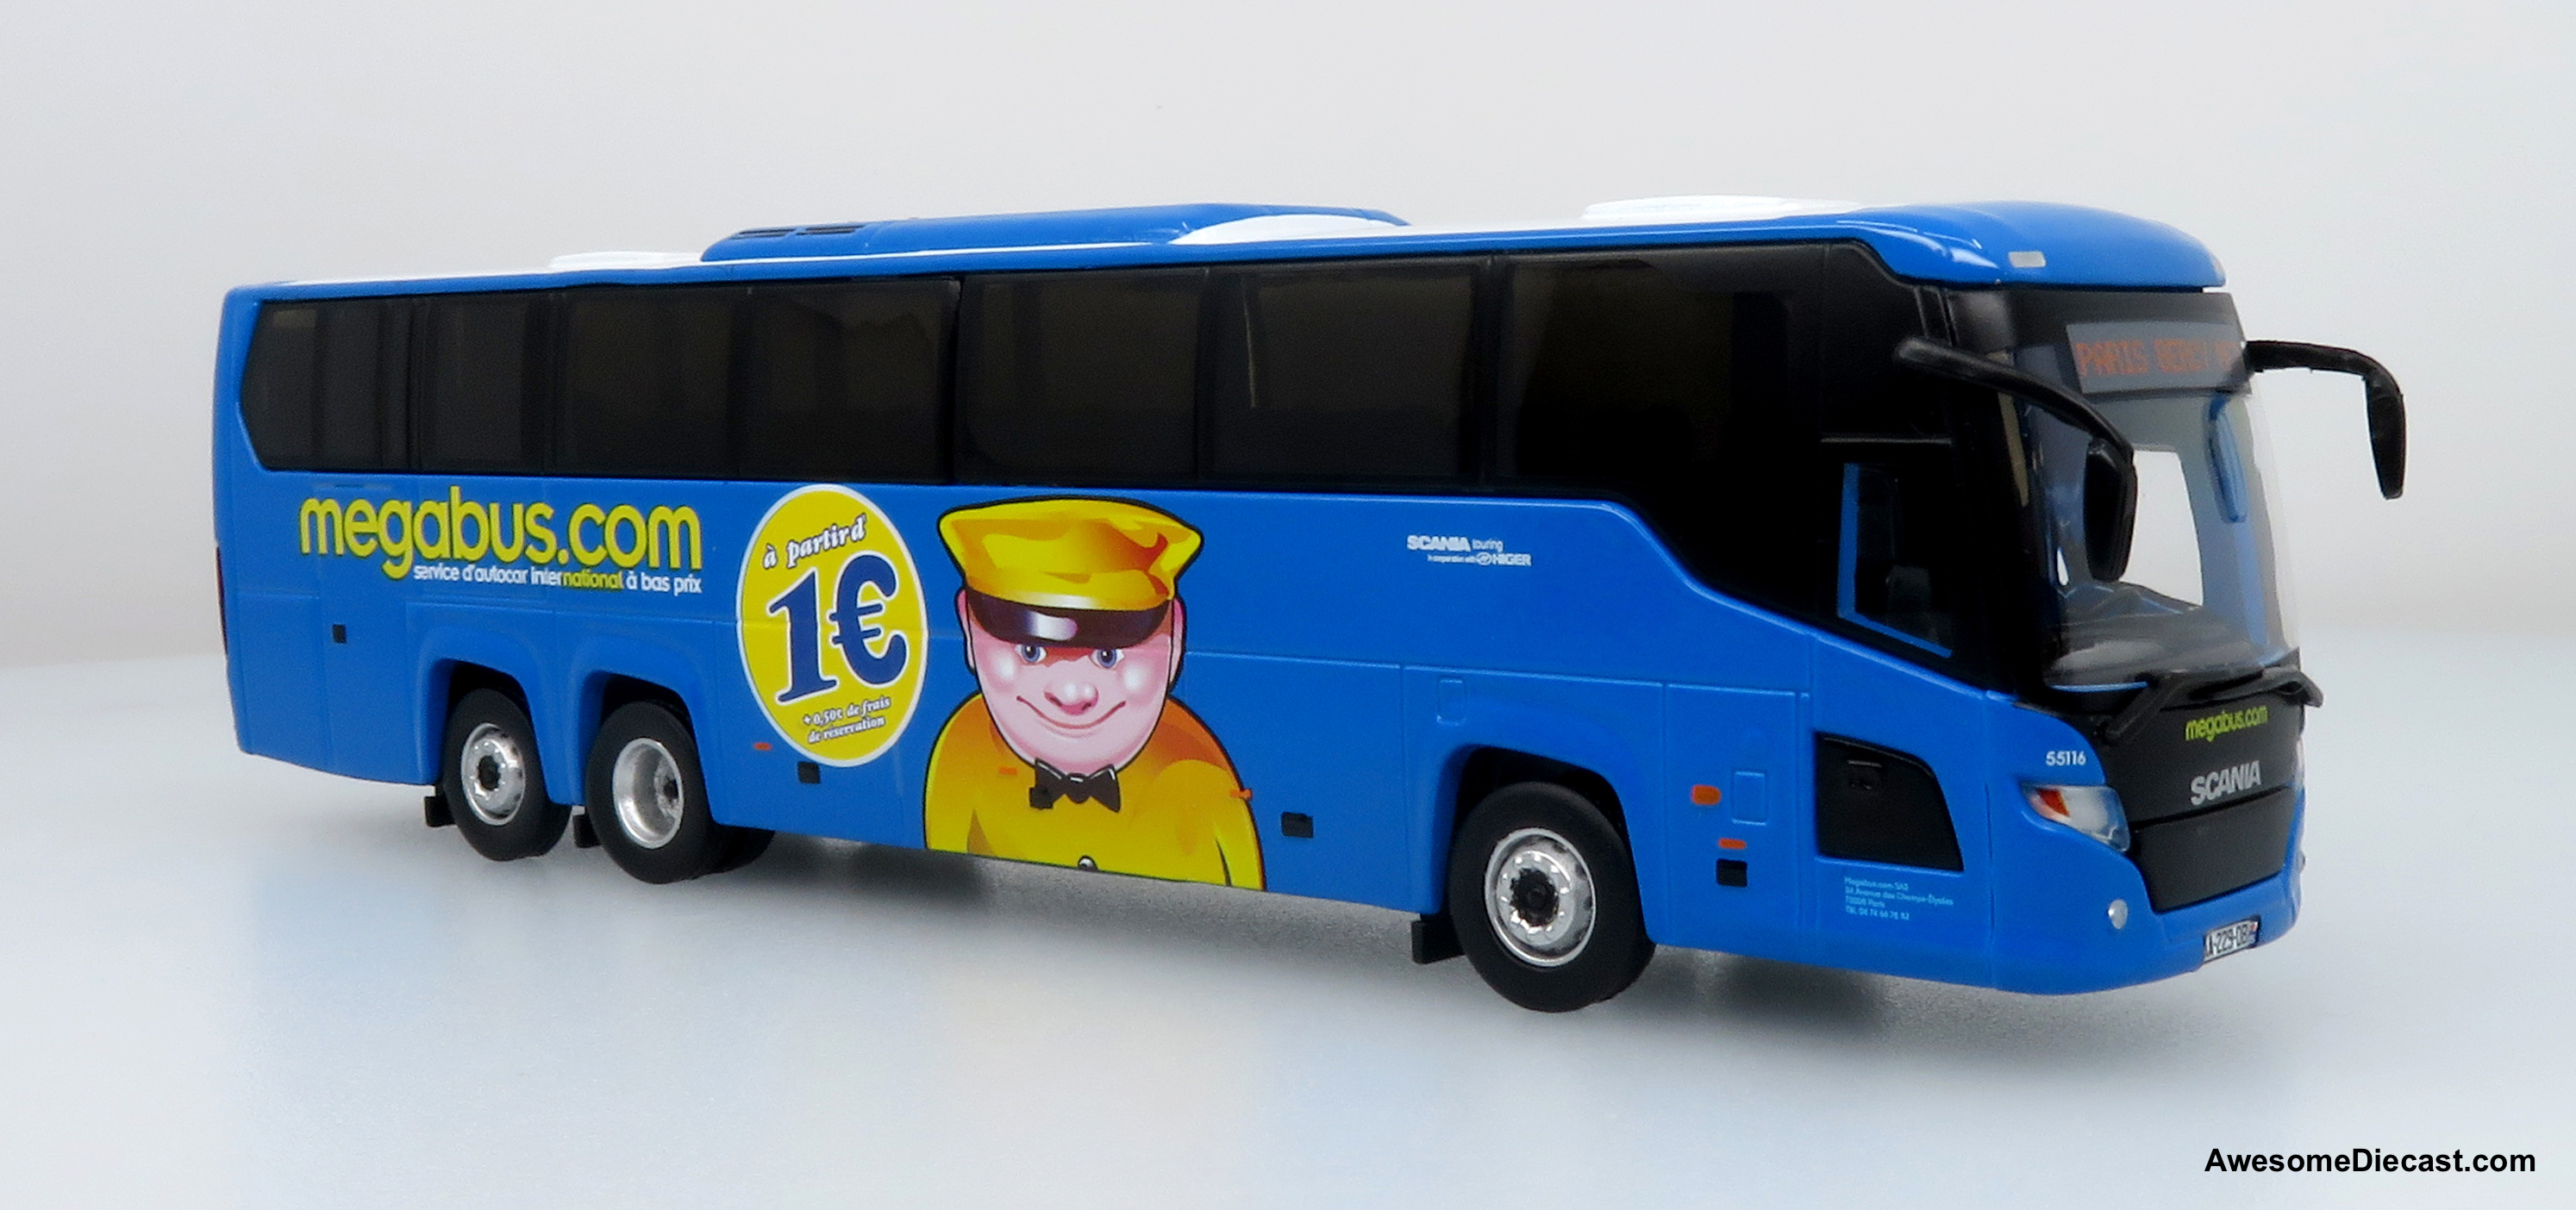 Iconic Replicas 1:87 Scania Touring HD Coach: Megabus France